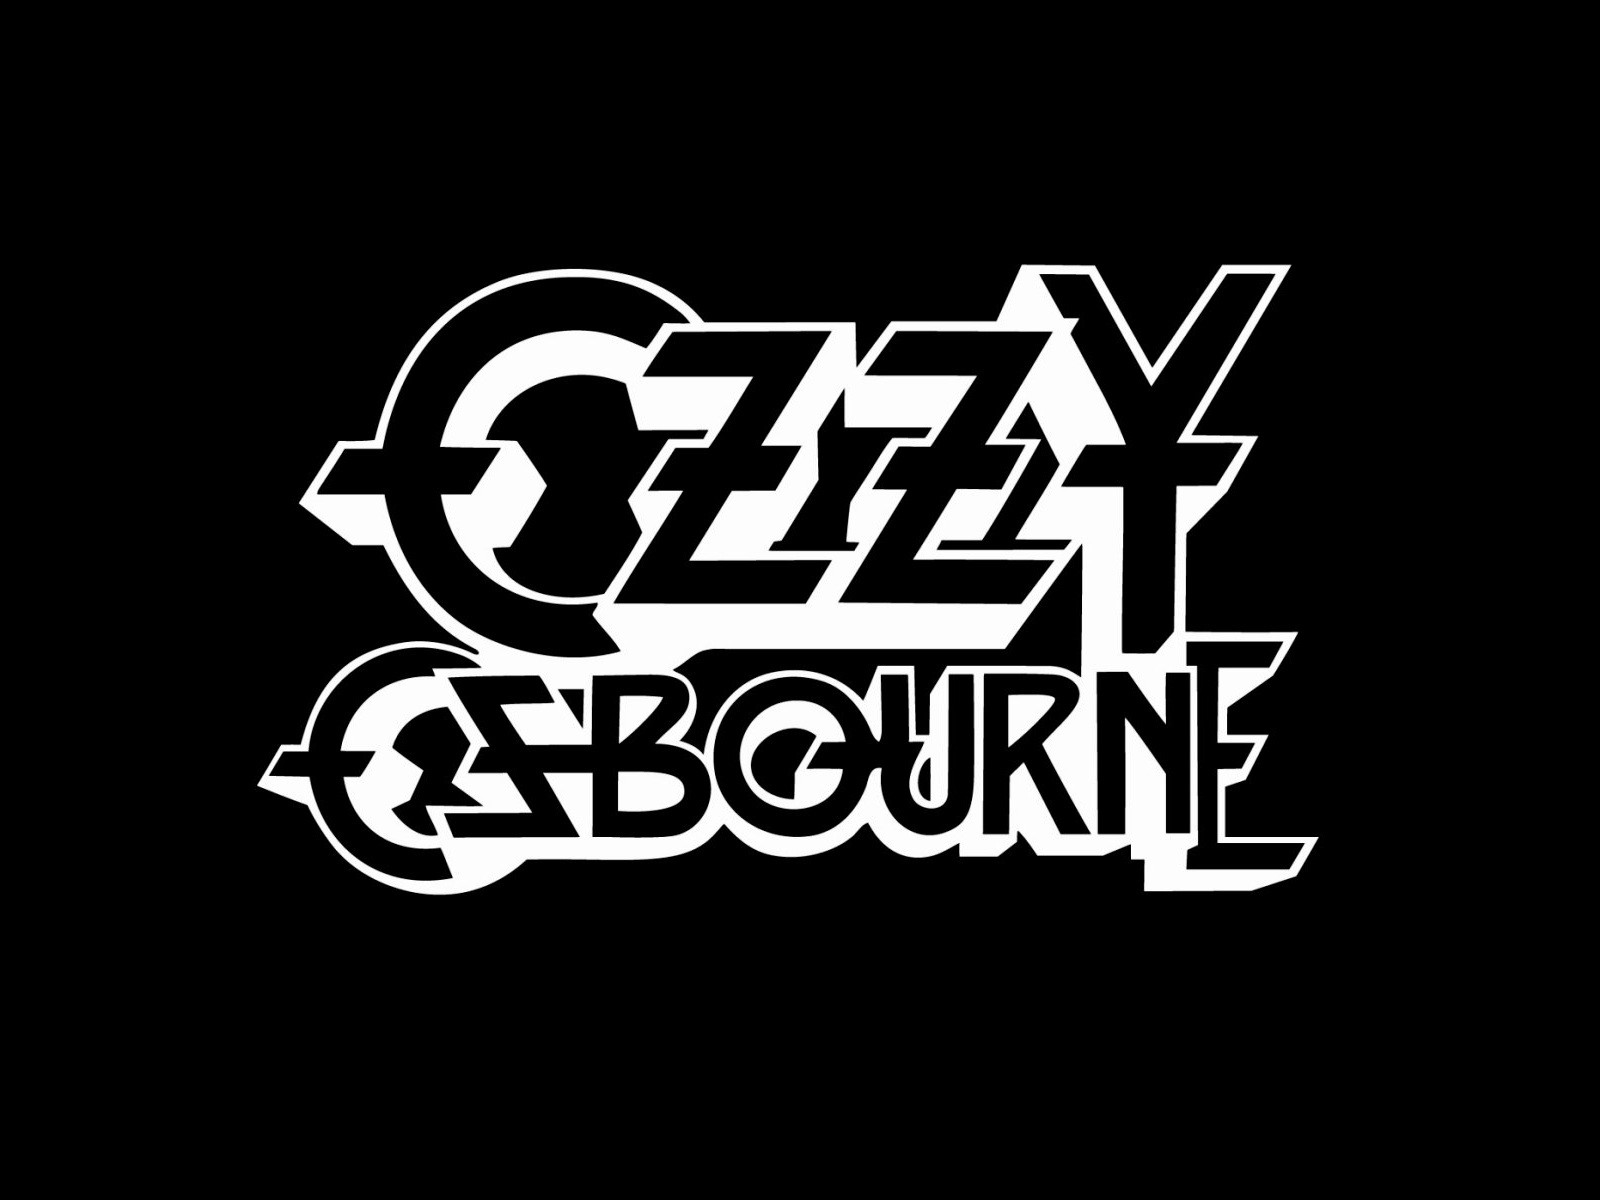 ozzy, Osbourne, Heavy, Metal, Hard, Rock, Bands, Groups, Music, Entertainment, Album, Covers Wallpaper